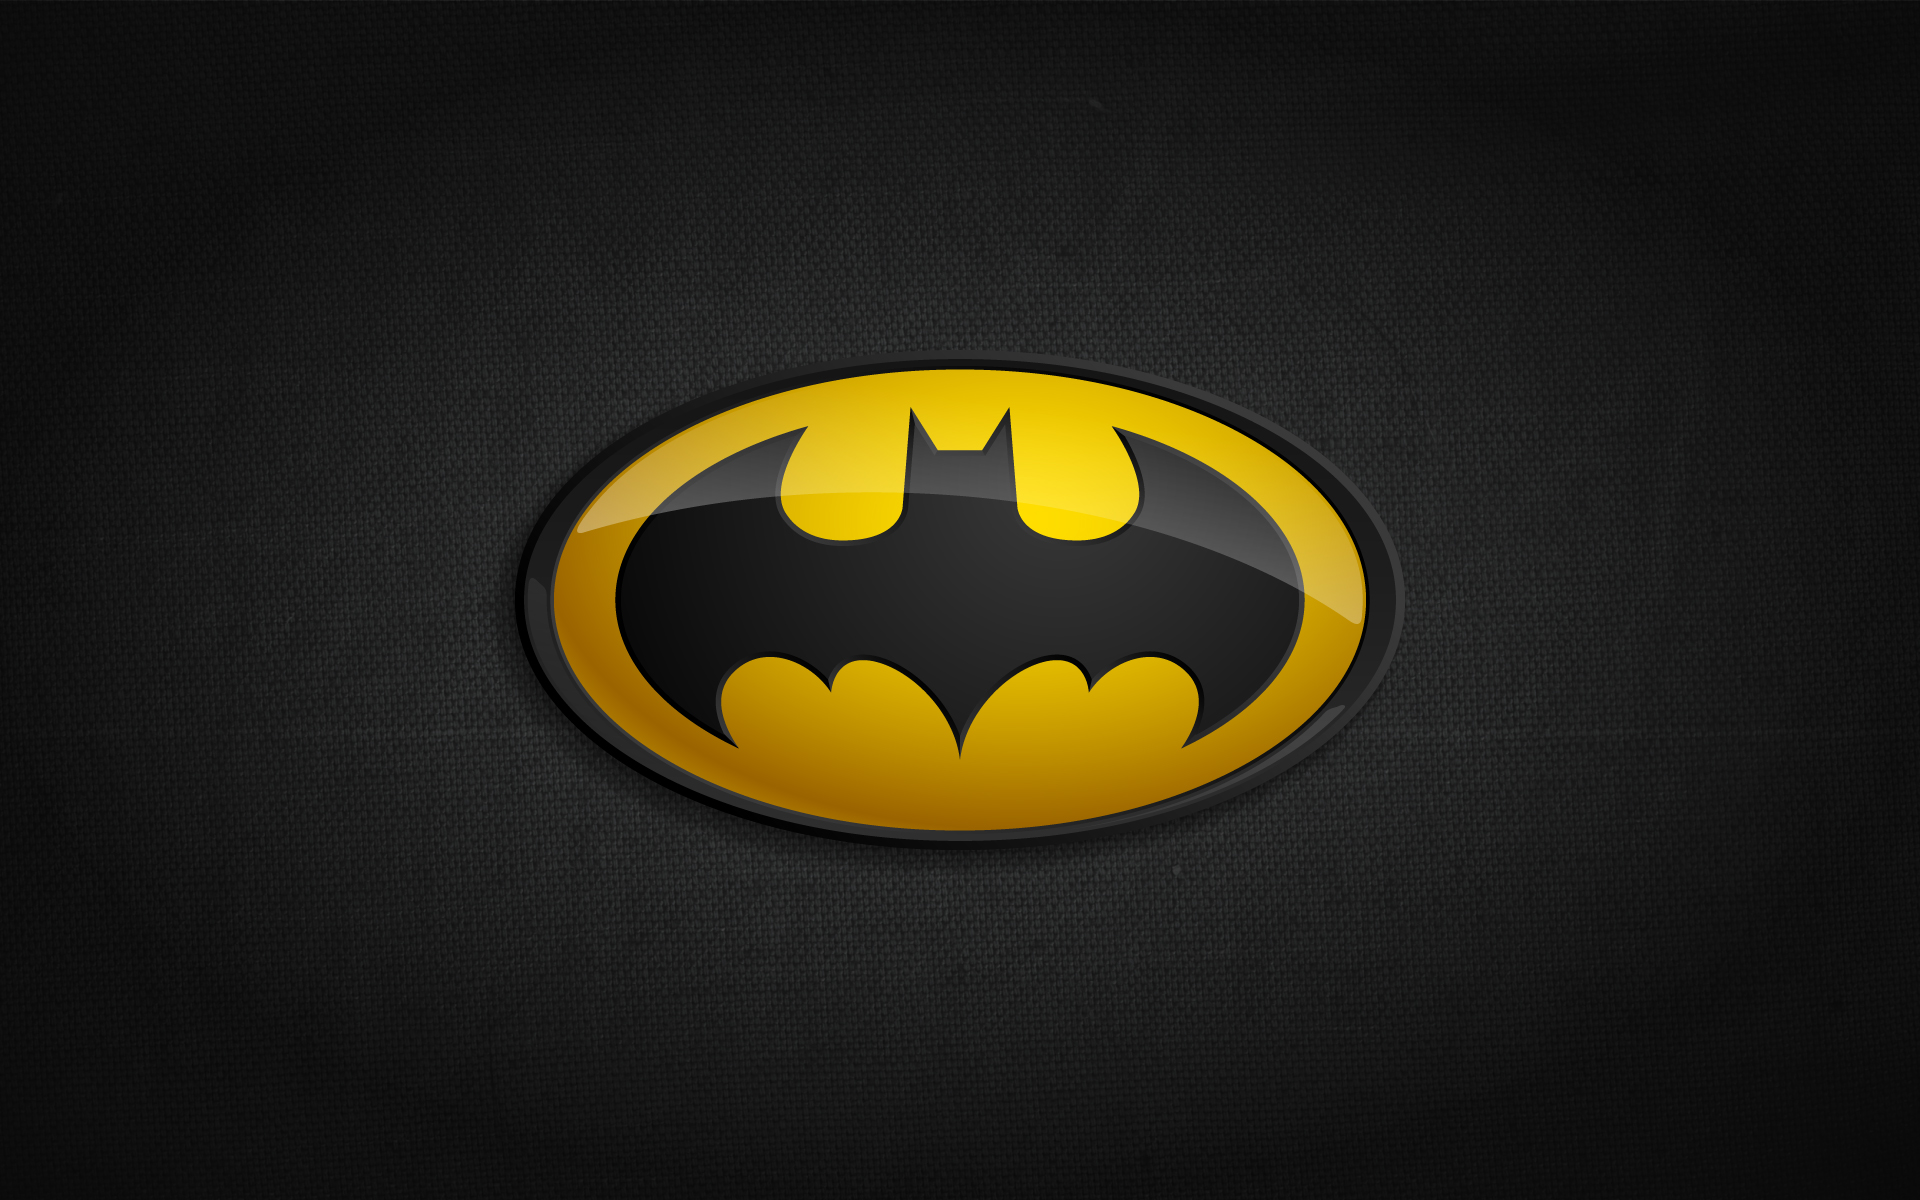 The Batman Marvel Wallpaper Full HD Free Download for Desktop, Laptop